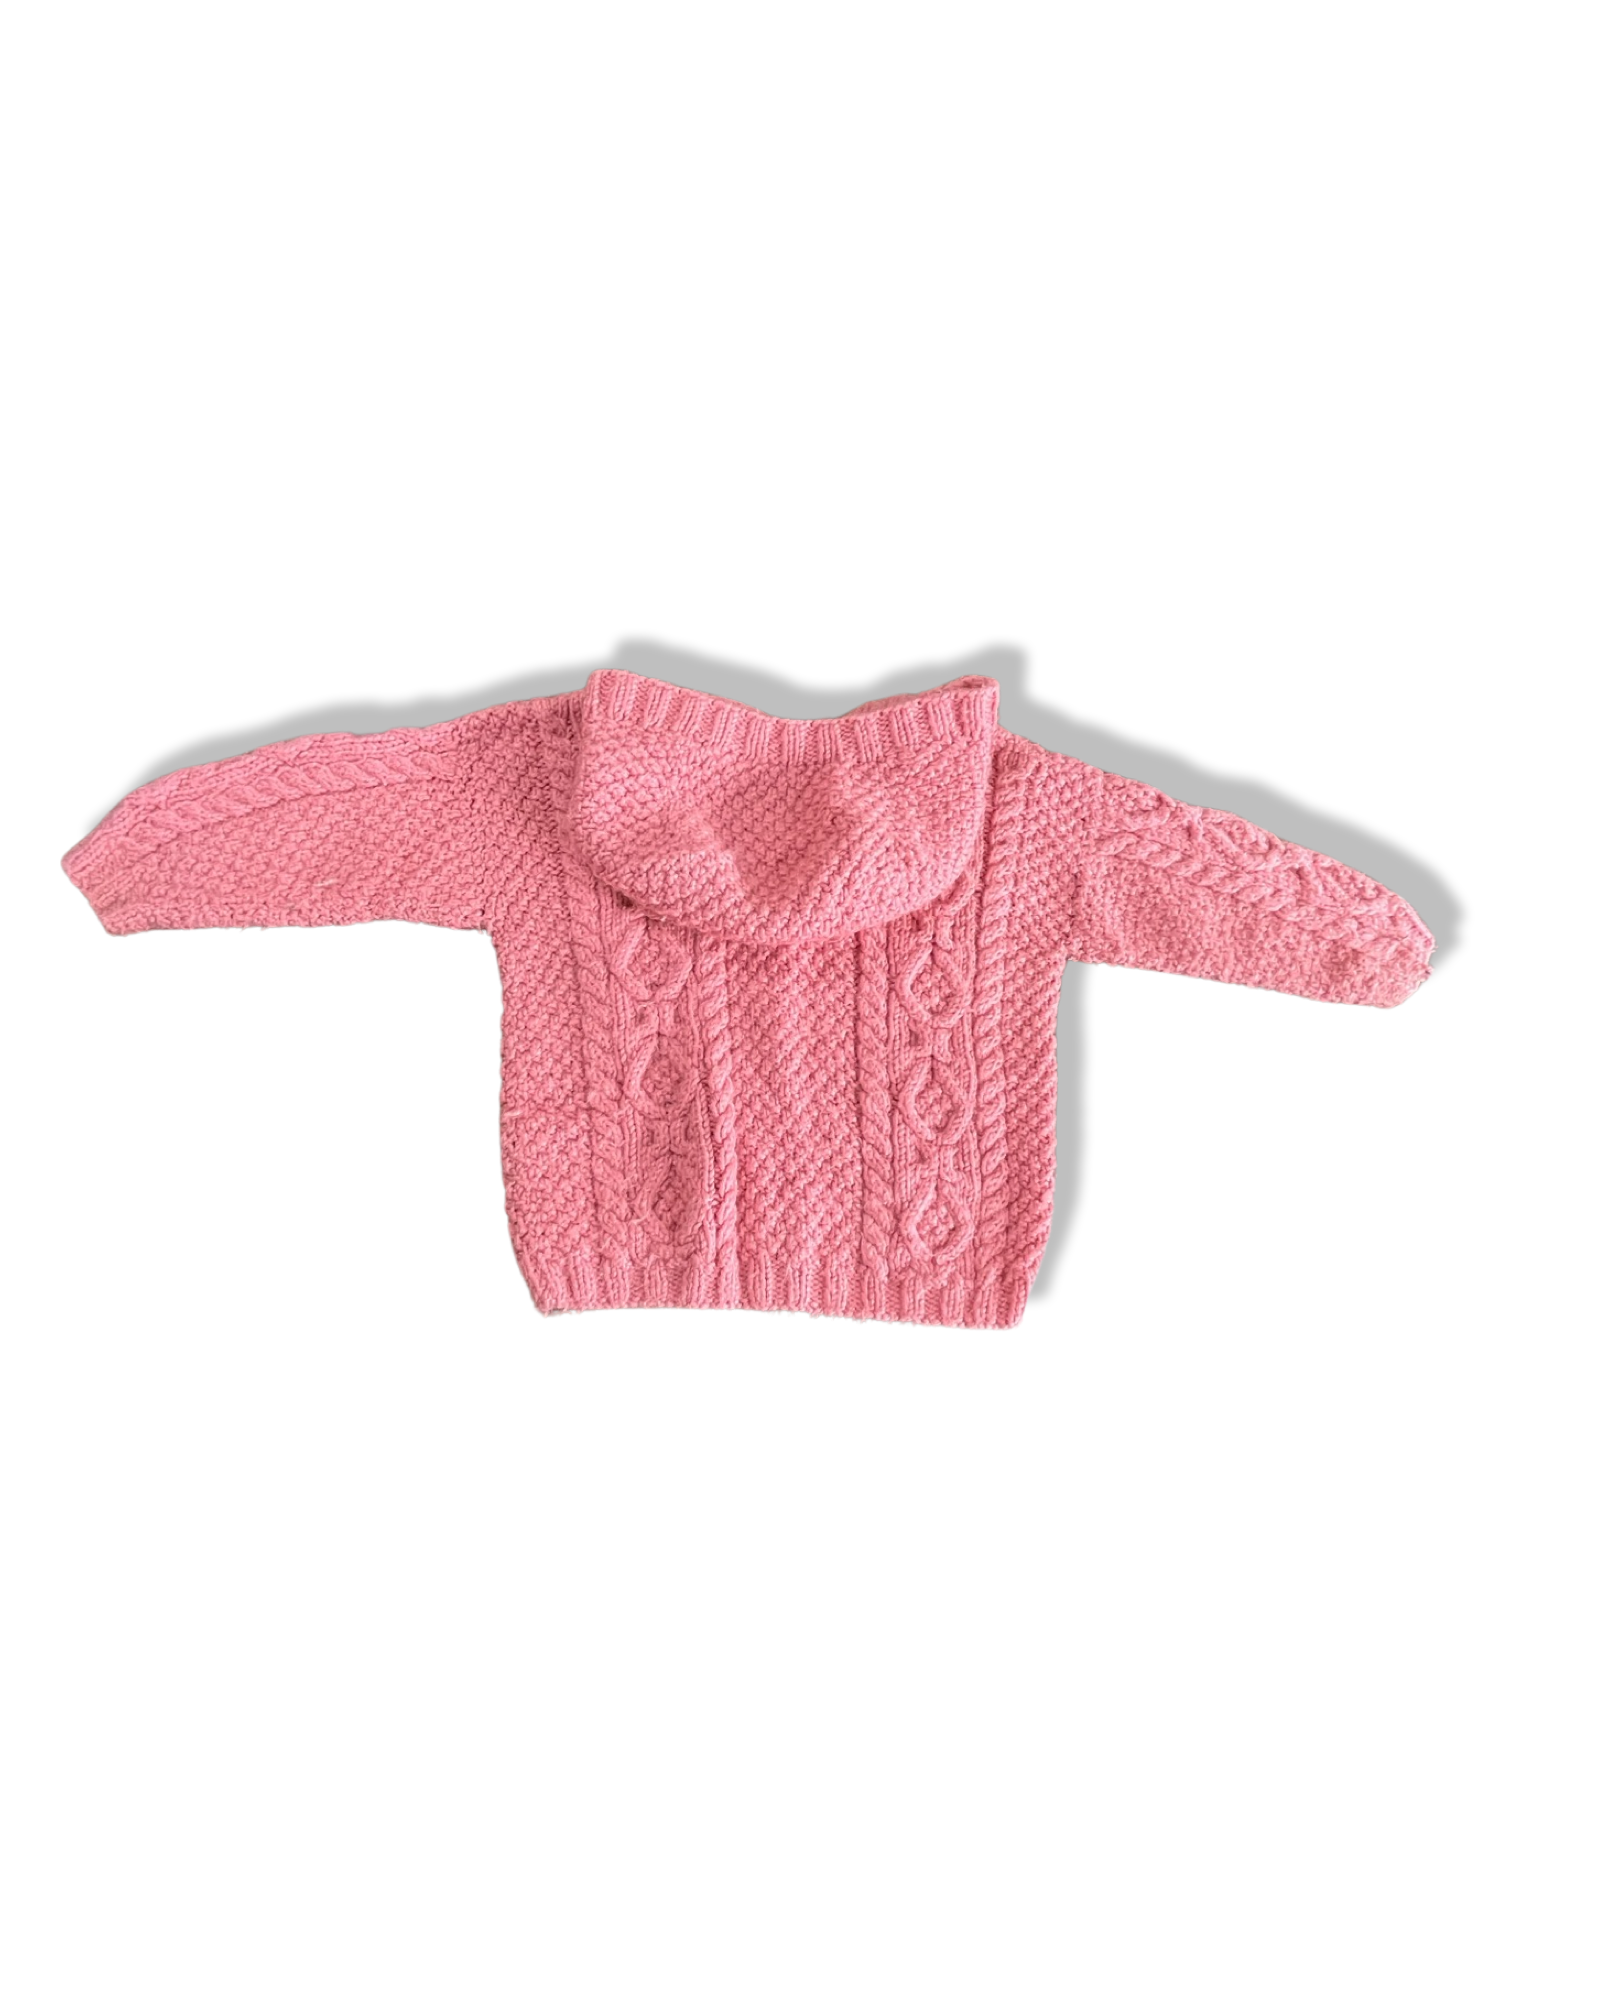 Handmade Knit Pink Sweater (2T)